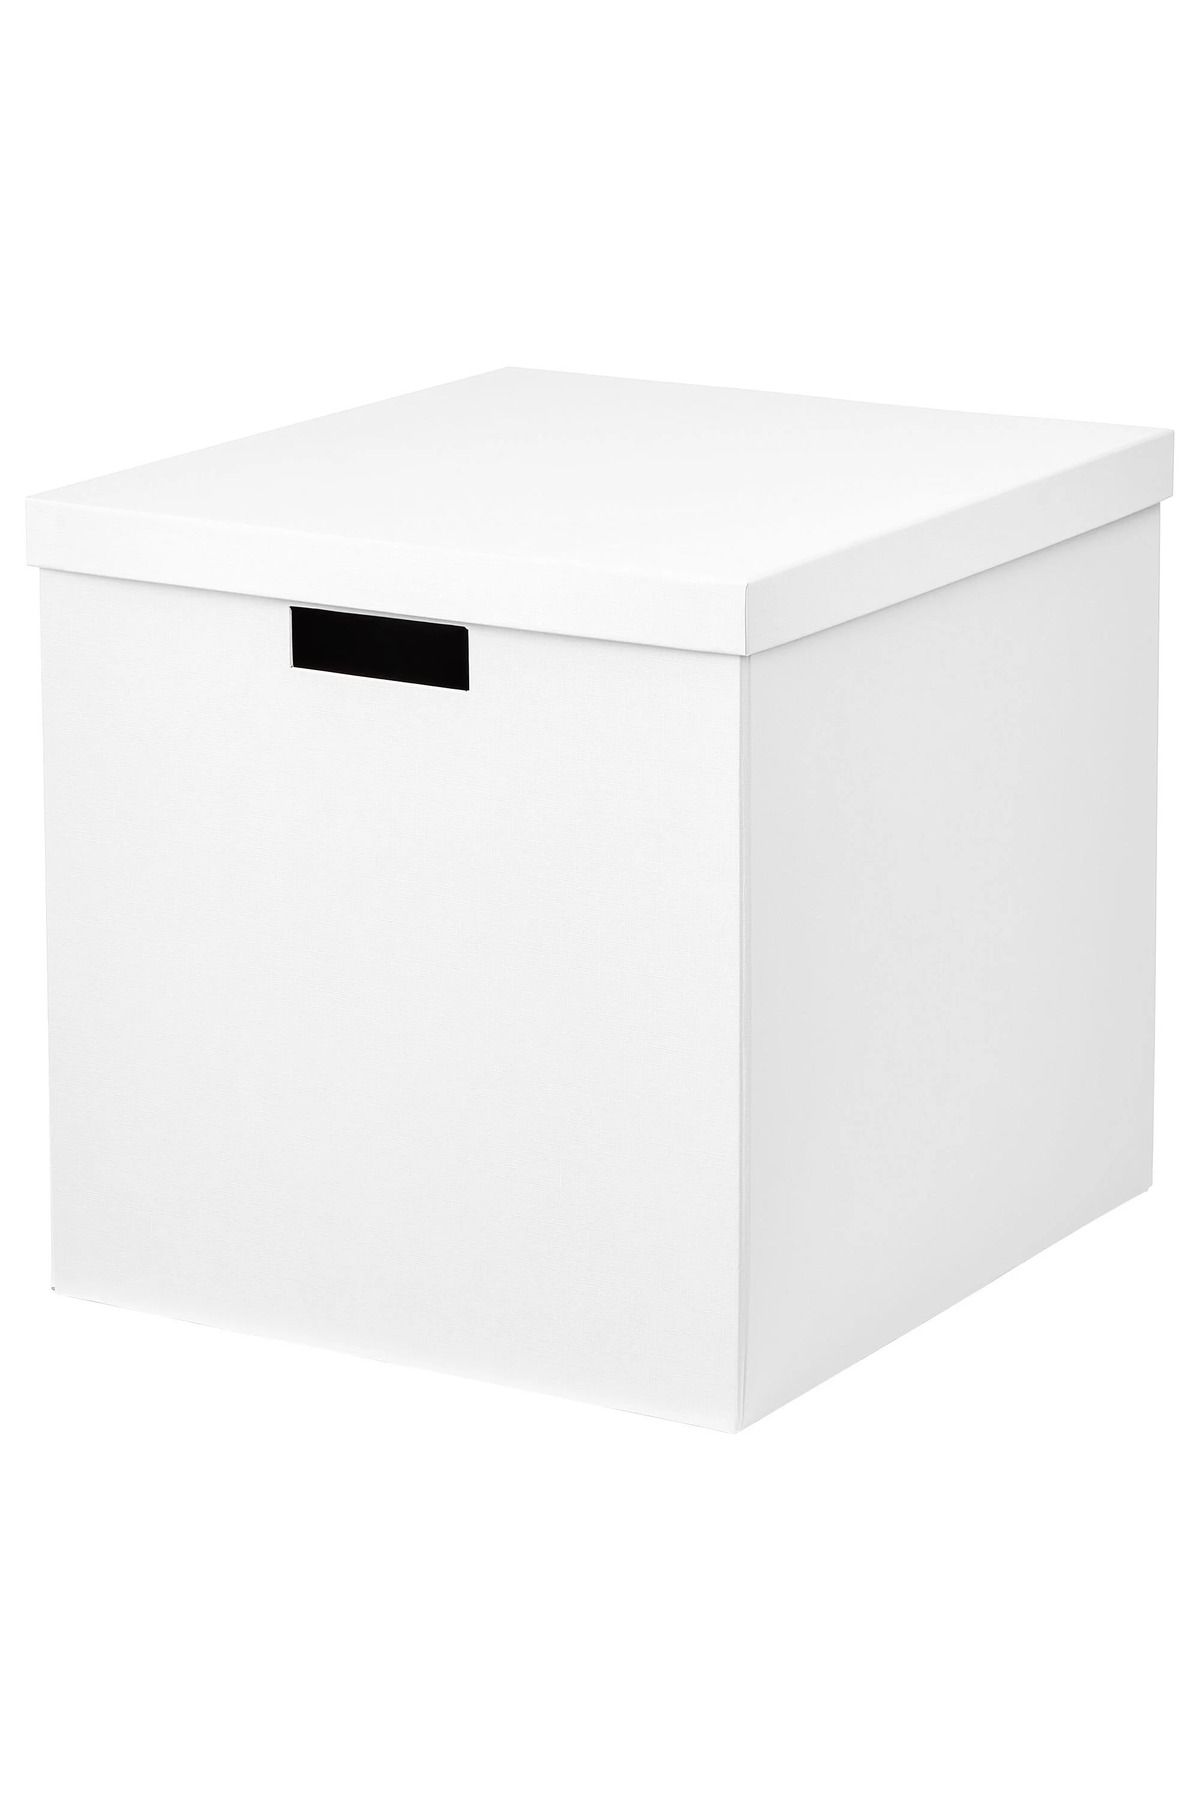 IKEA TJENA kapaklı kutu, beyaz, 32x35x32 cm